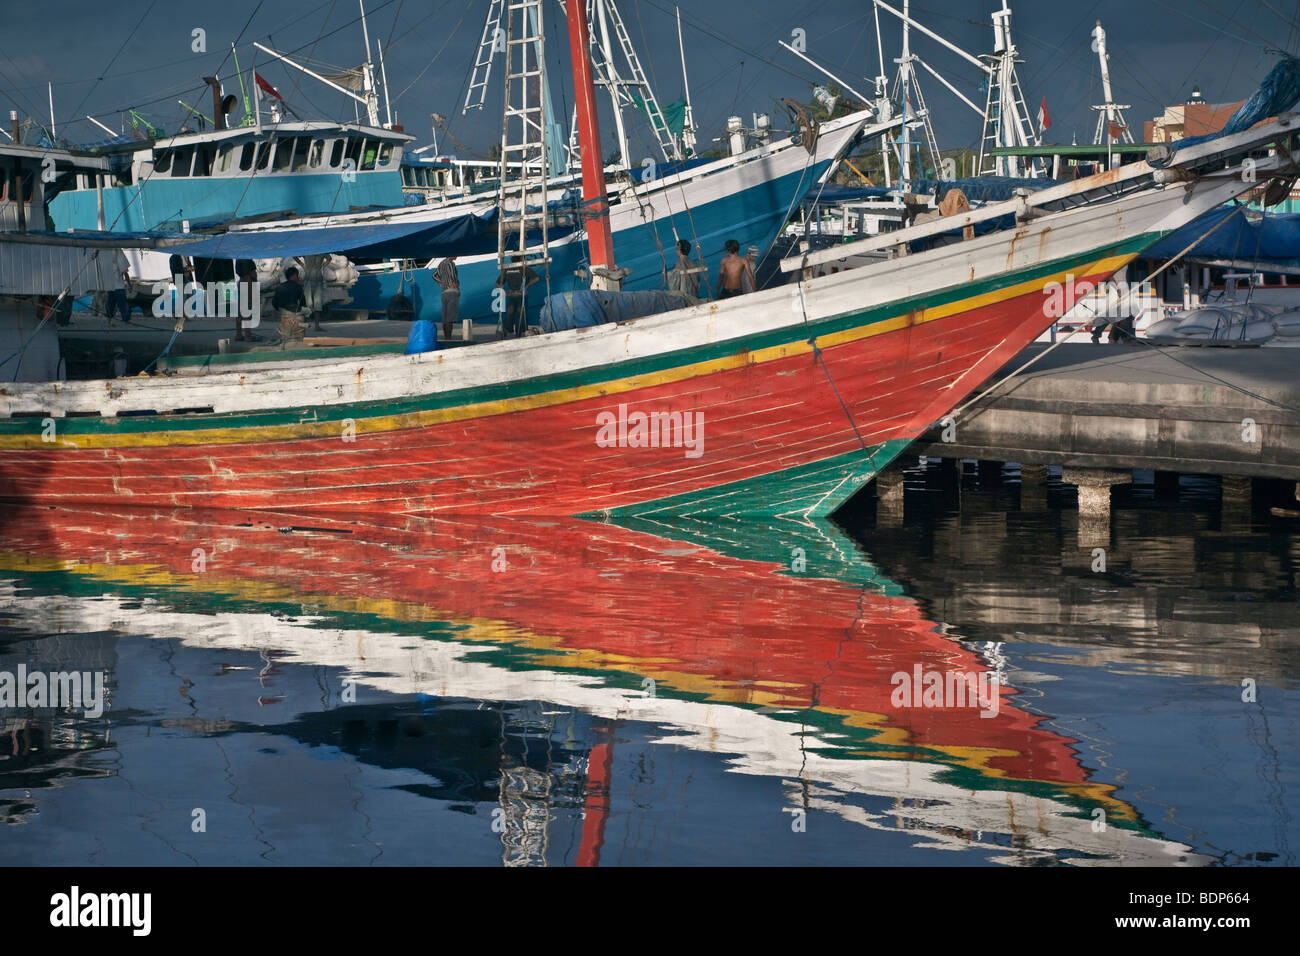 Indonesia, Sulawesi, Makassar, (formerly Ujung Pandang) Pelabuhan Paotere harbor where Bugis sailing ships berth, late afternoon Stock Photo